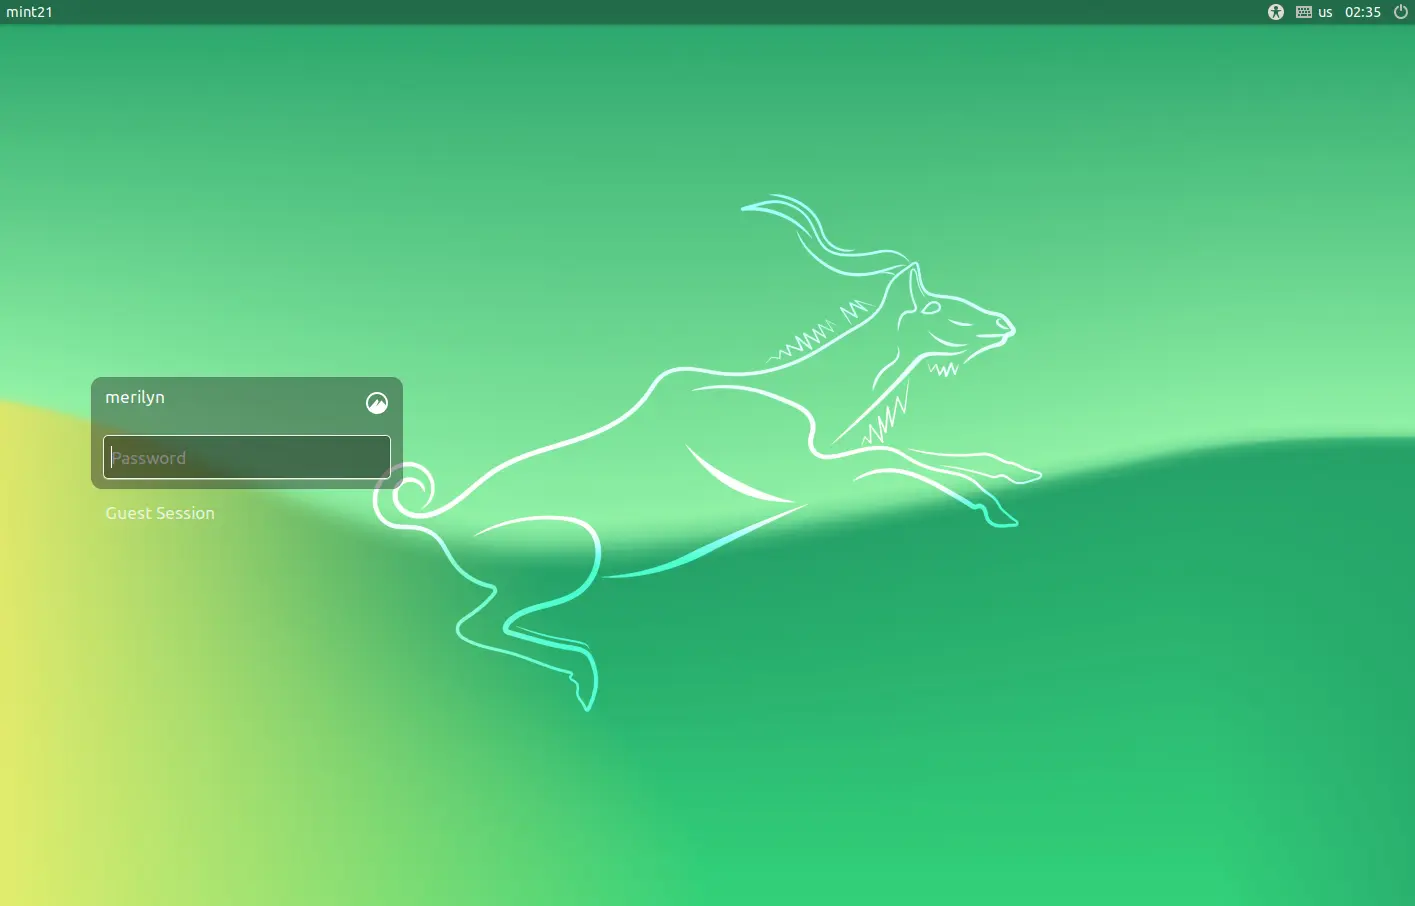 How to Change Login Screen Background in Linux Mint 21 [Fix Blank Screen] -  FOSTips